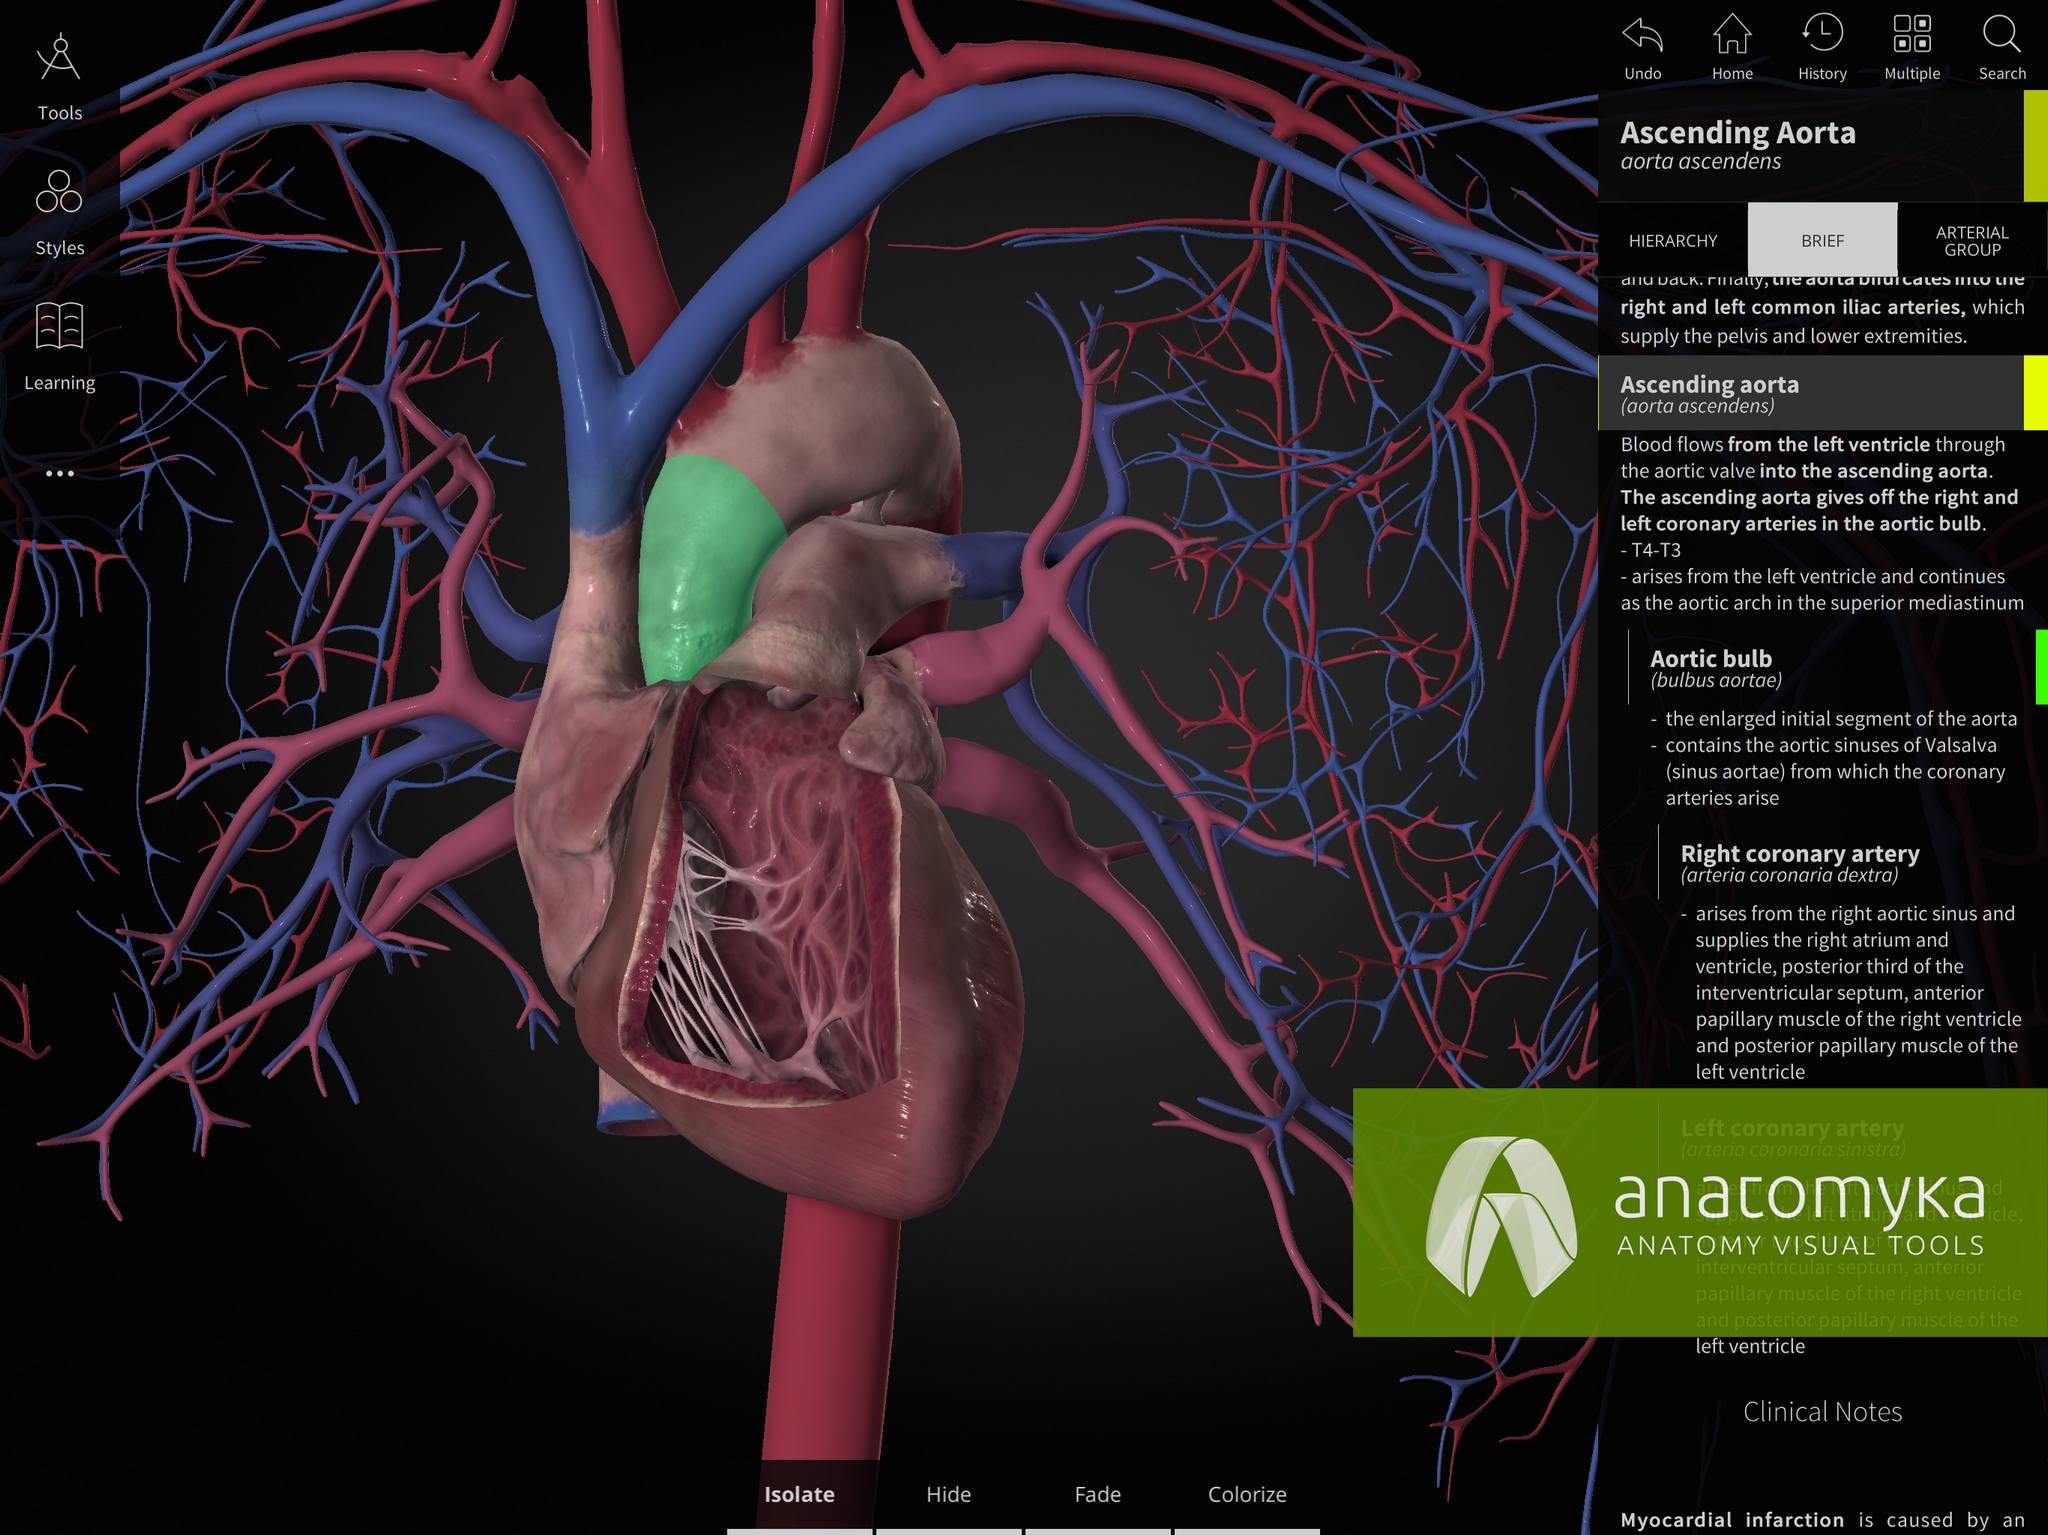 3D Human Anatomy Education App L Anatomyka